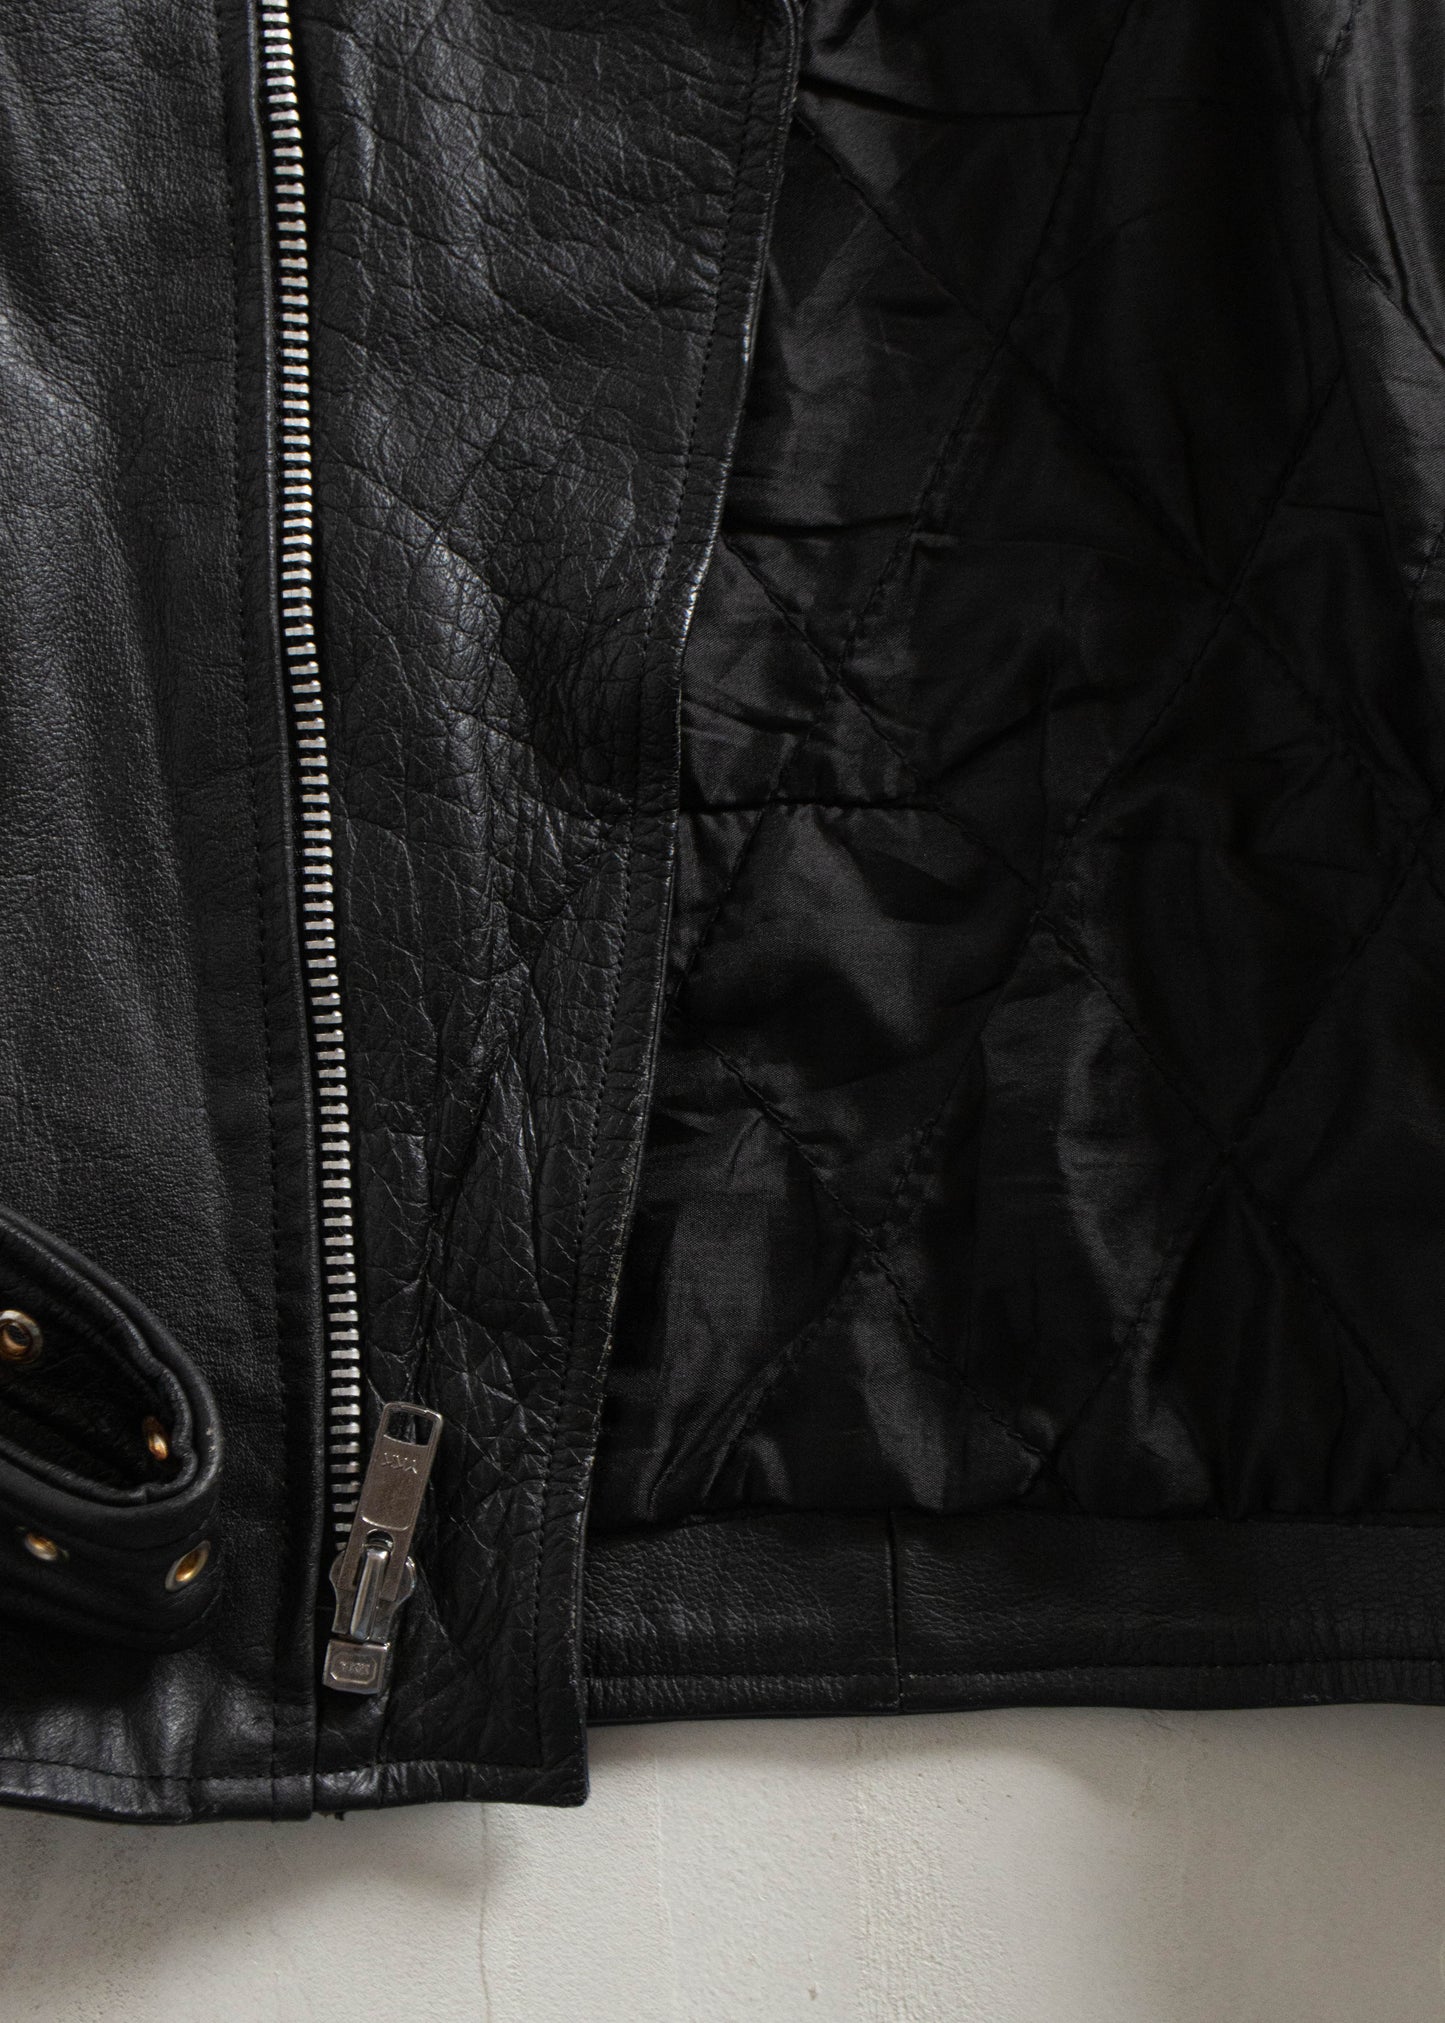 1990s Screamin' Eagle Leather Moto Perfecto Jacket Size XL/2XL